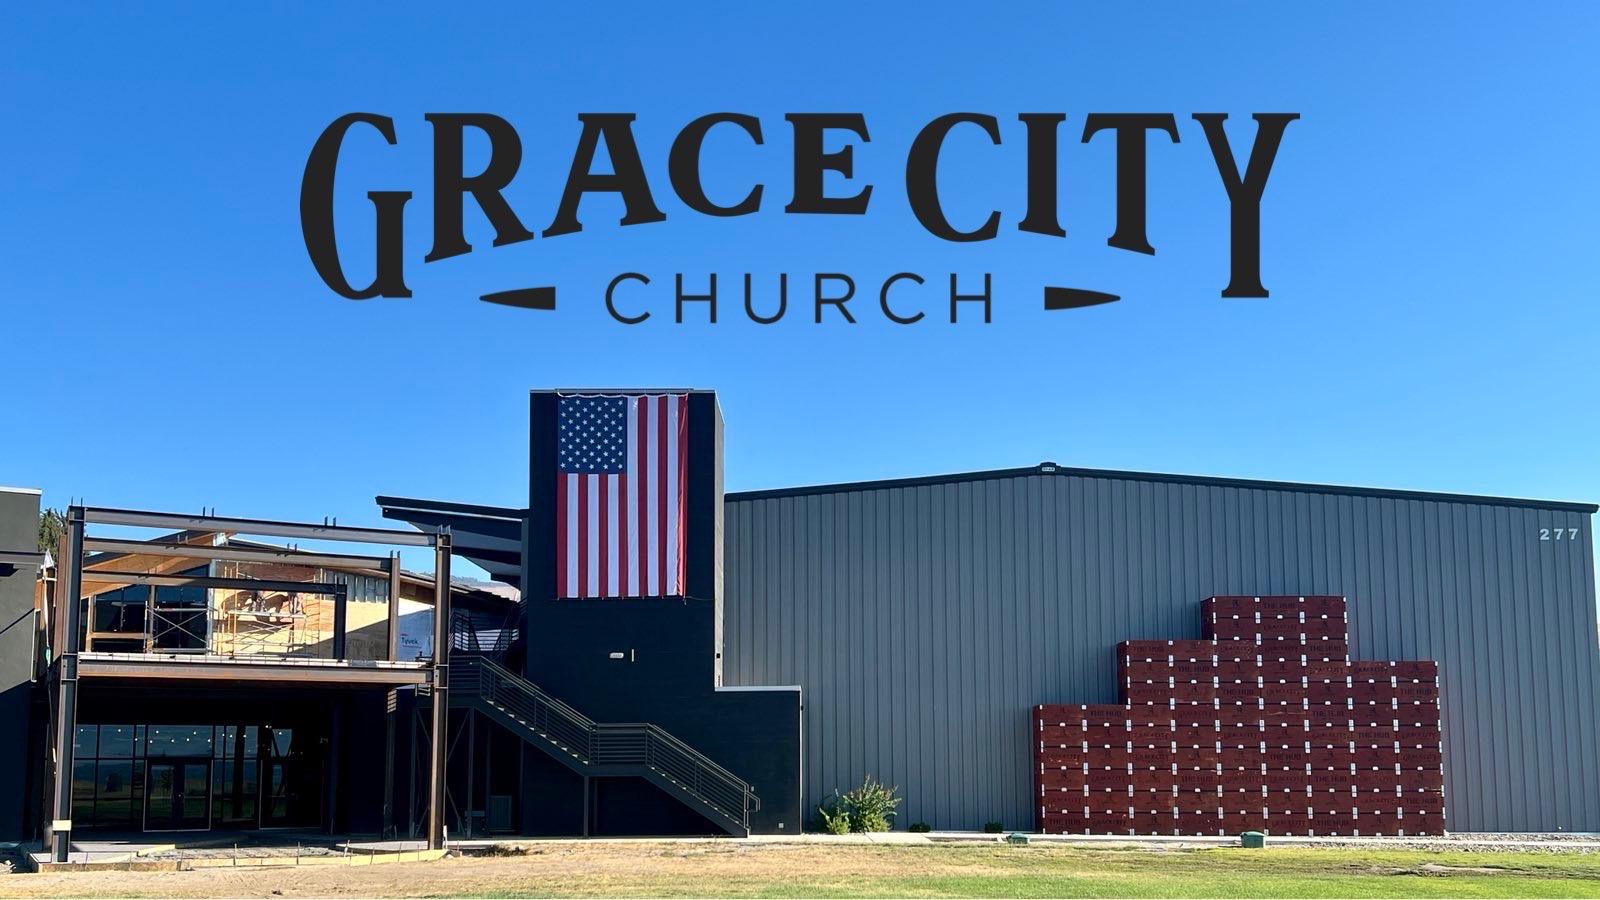 Grace City Church building